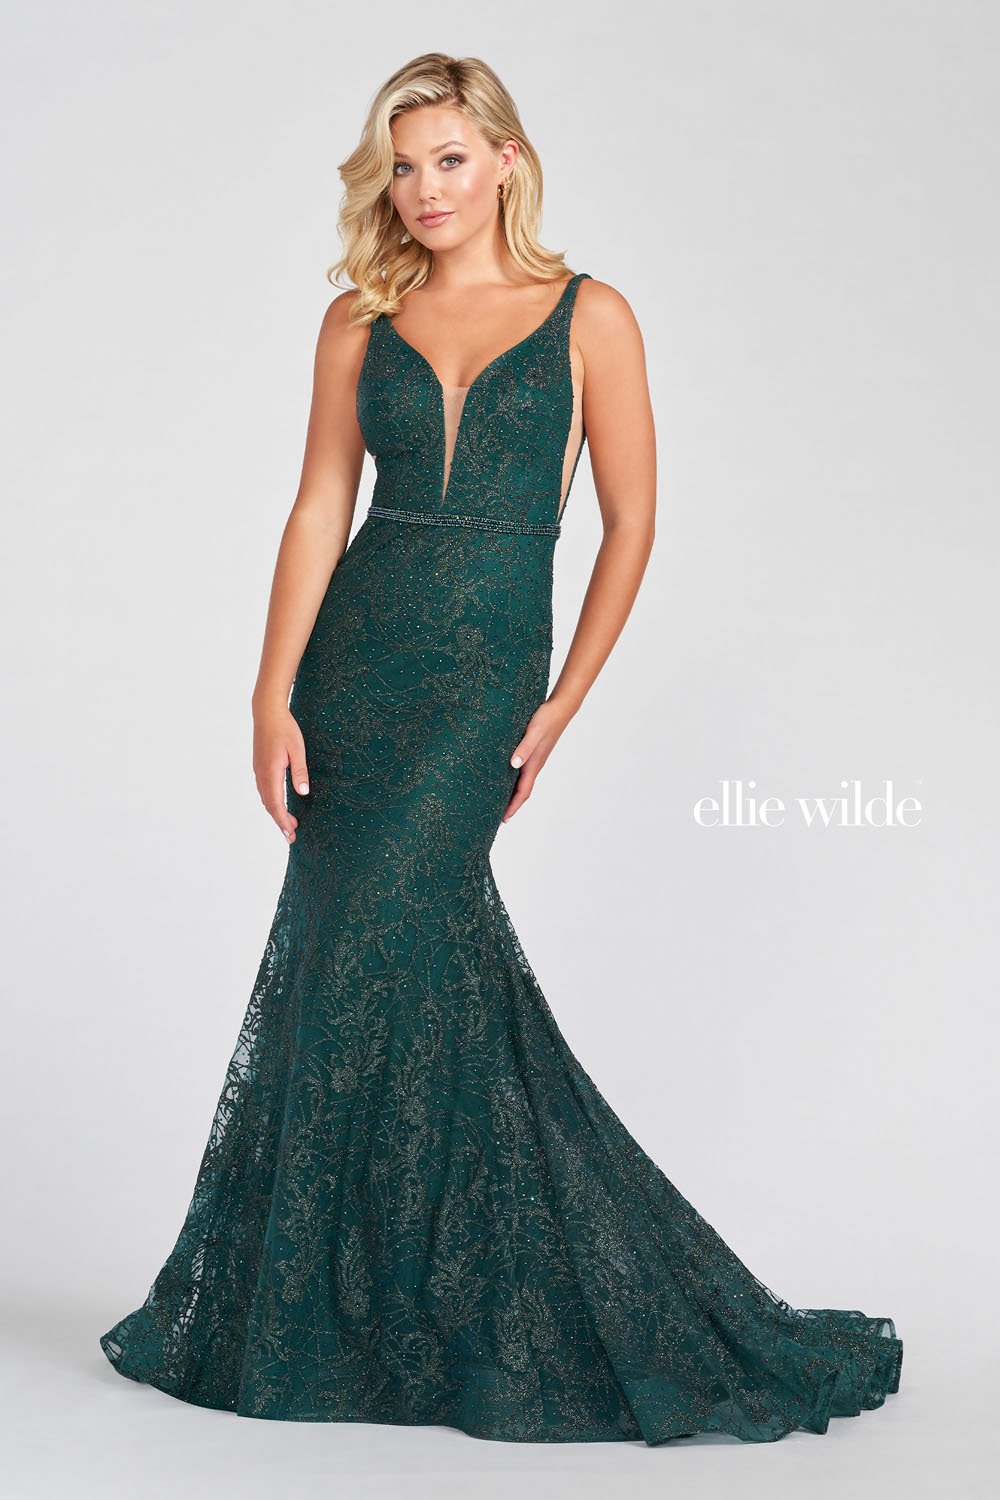 Ellie Wilde Emerald EW122056 Prom Dress Image.  Emerald formal dress.